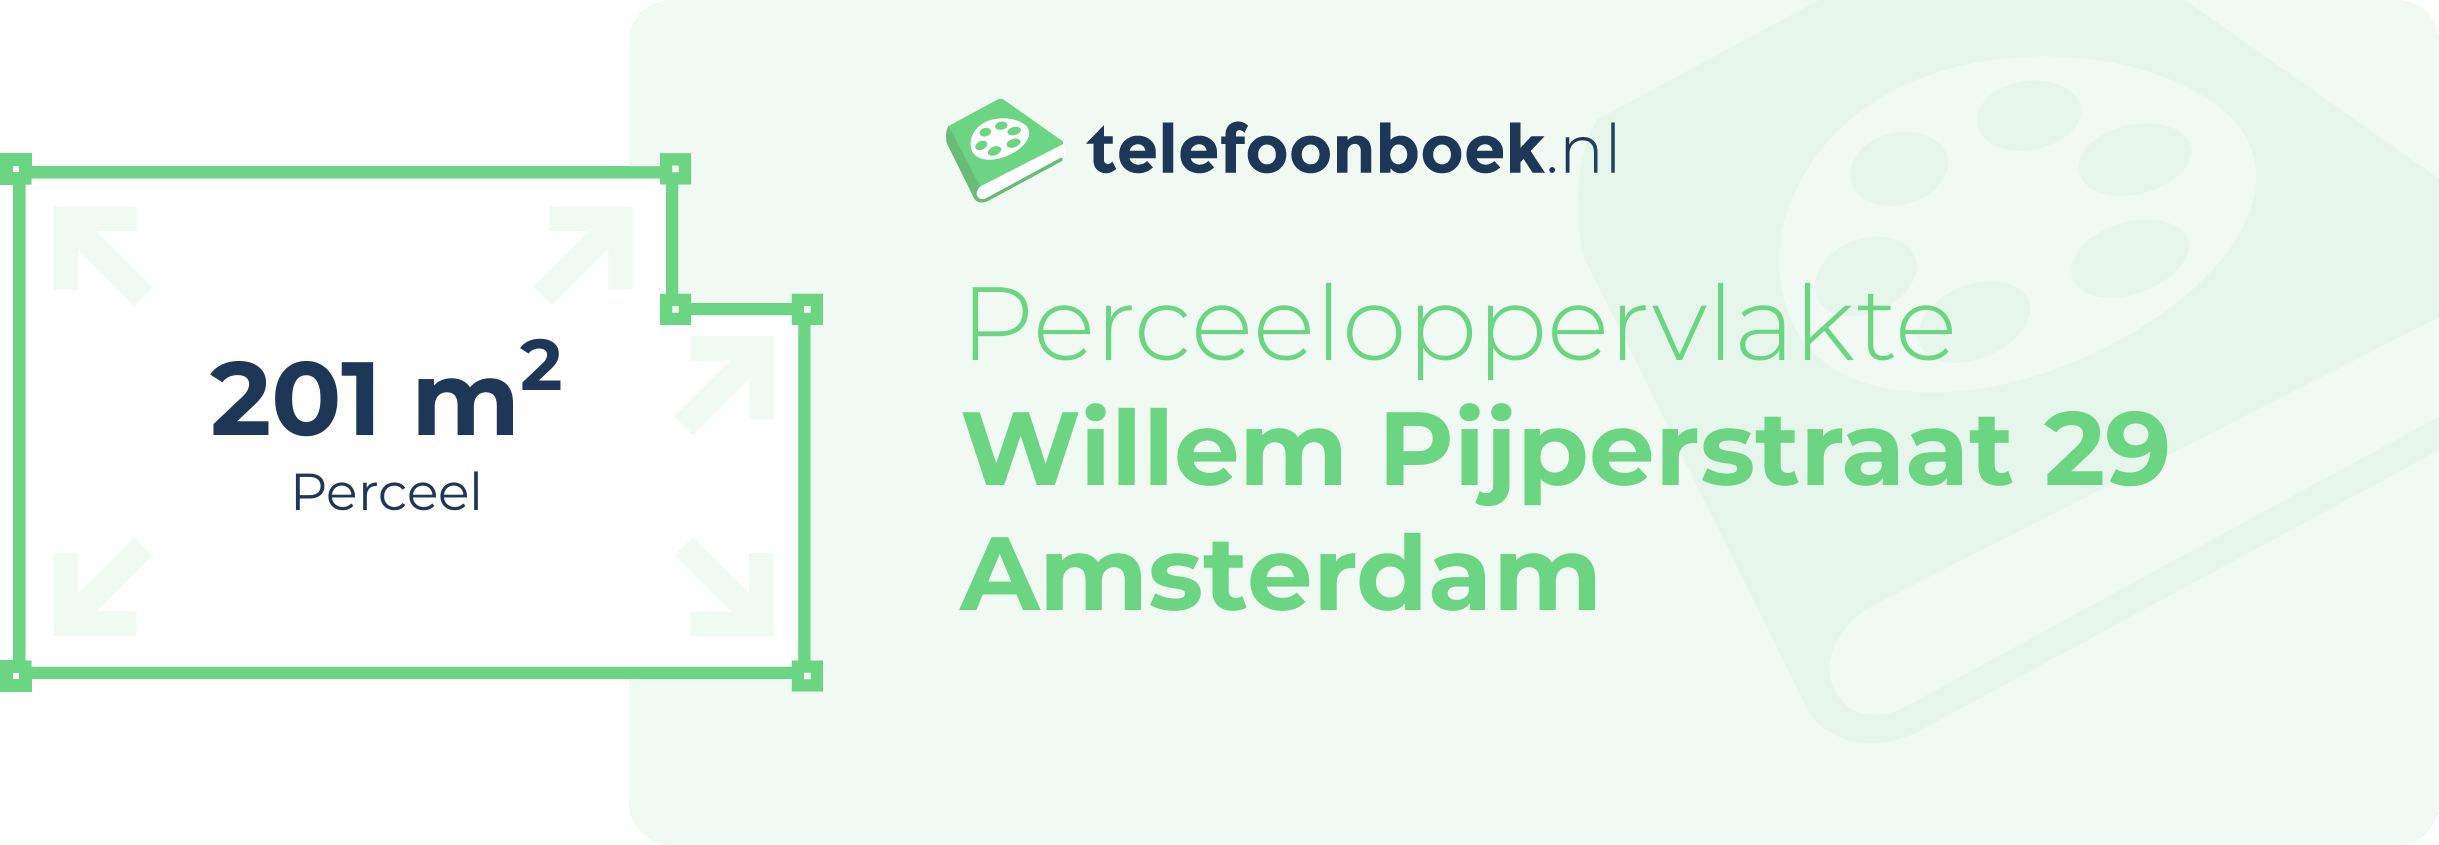 Perceeloppervlakte Willem Pijperstraat 29 Amsterdam